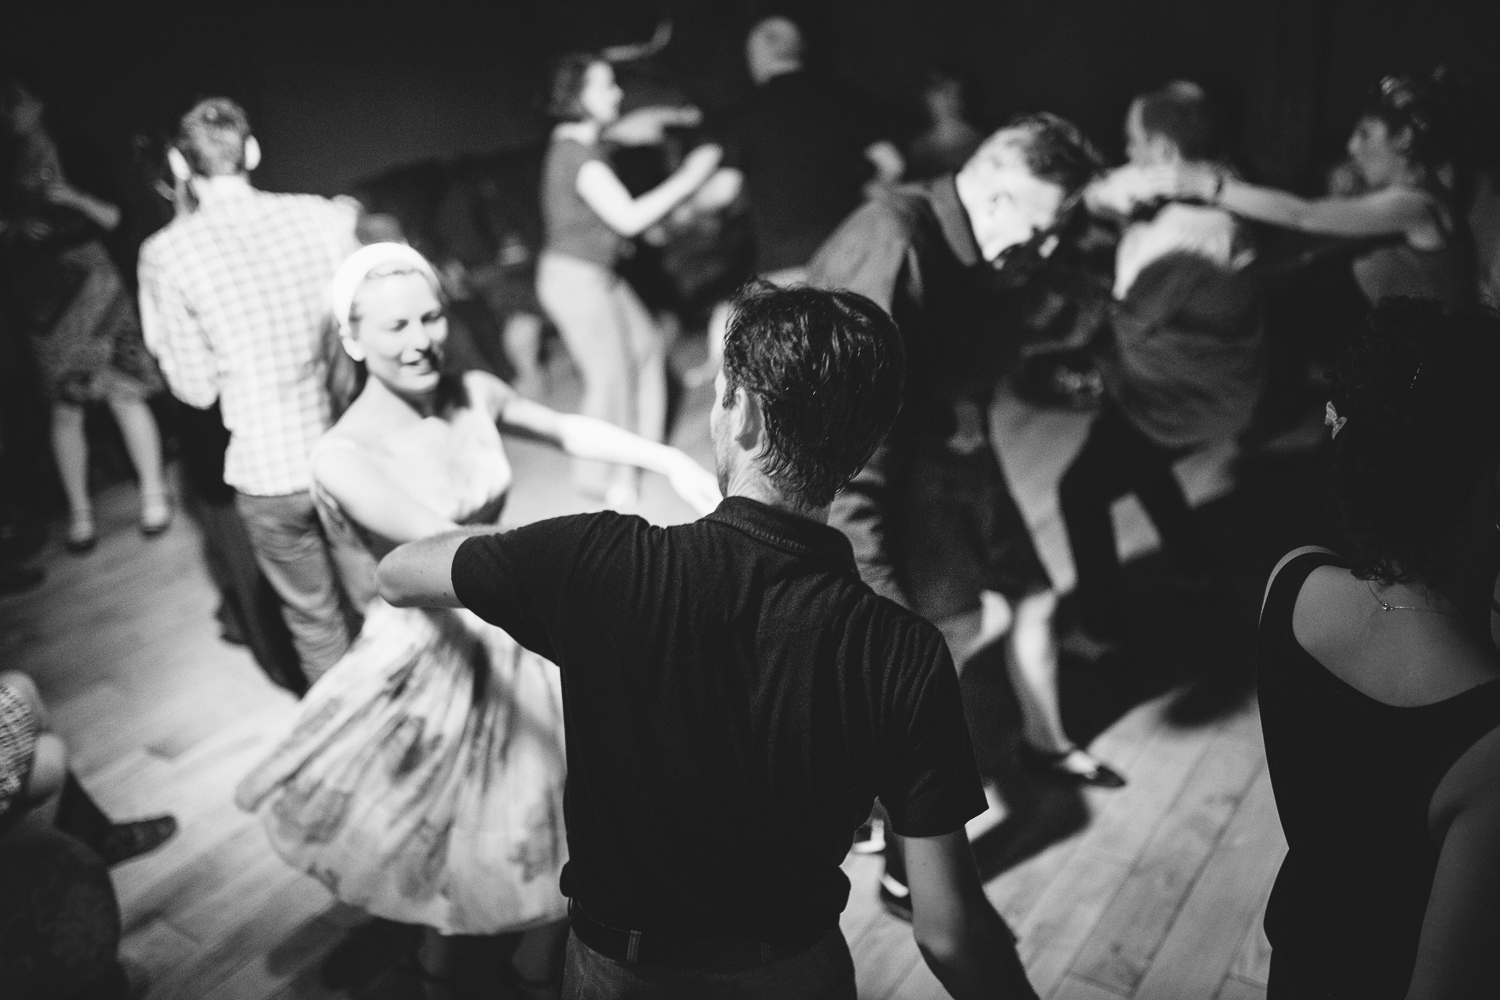  Grand Bal Swing à la Bellevilloise - https://www.facebook.com/photosForDancersOnly / http://www.ebobrie.com/brotherswing-parties/ 